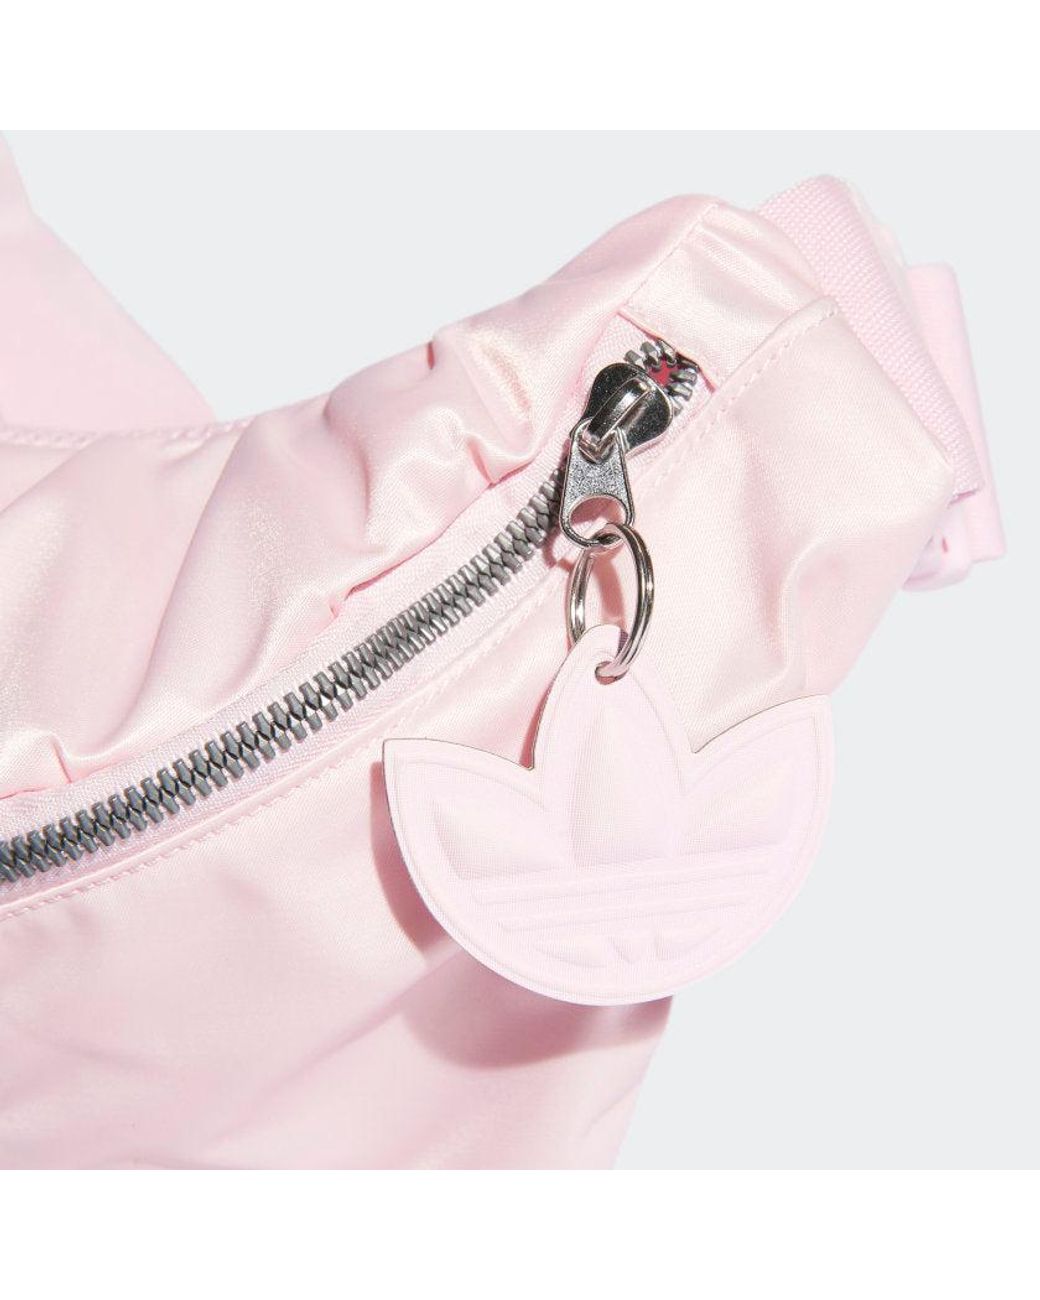 adidas Satin Waist Bag in Pink | Lyst